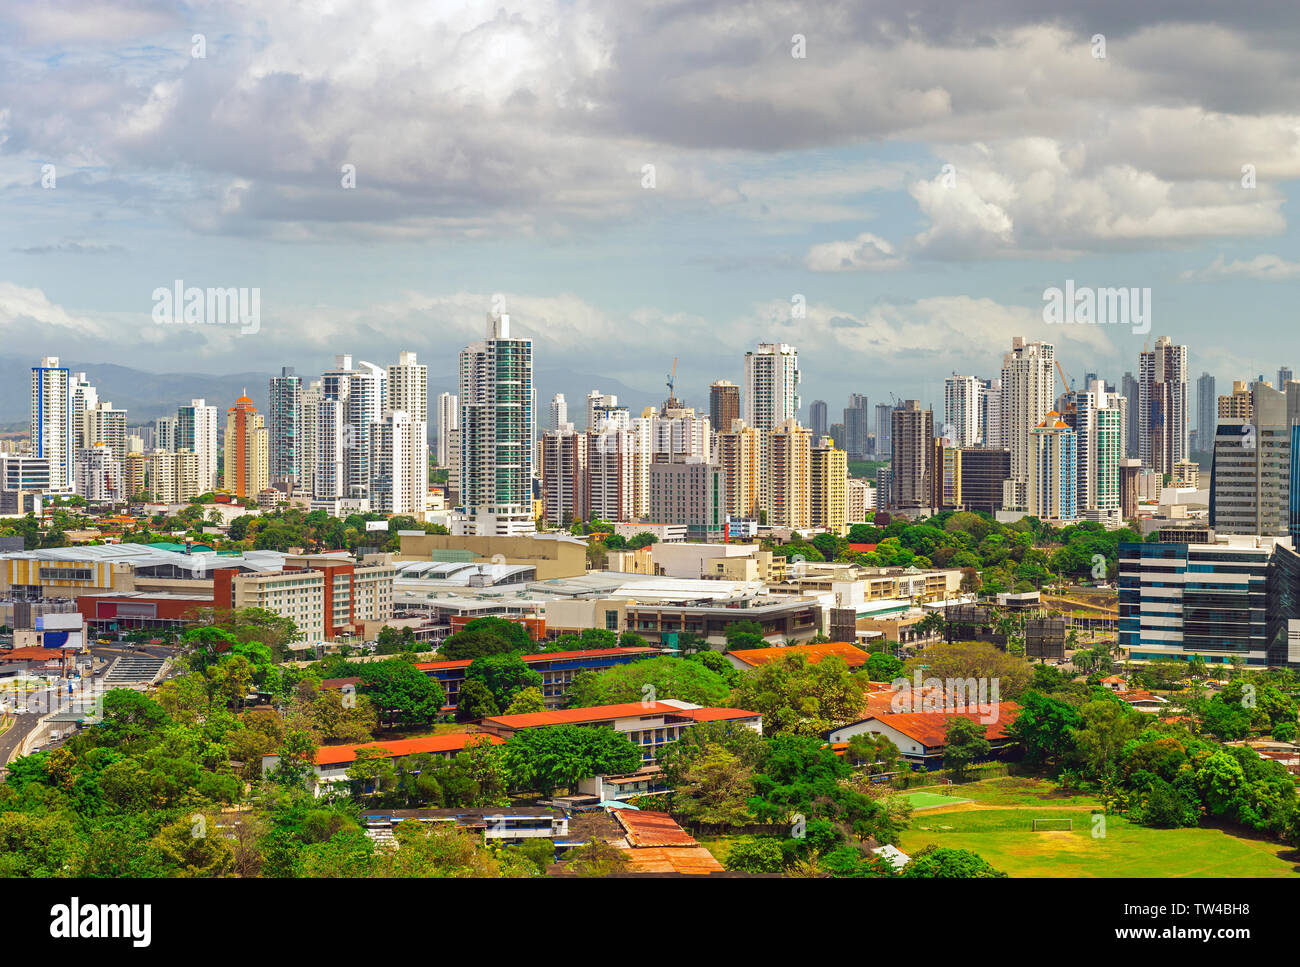 The urban skyline of Panama City with its impressive skyscrapers at sunrise, Panama. Stock Photo